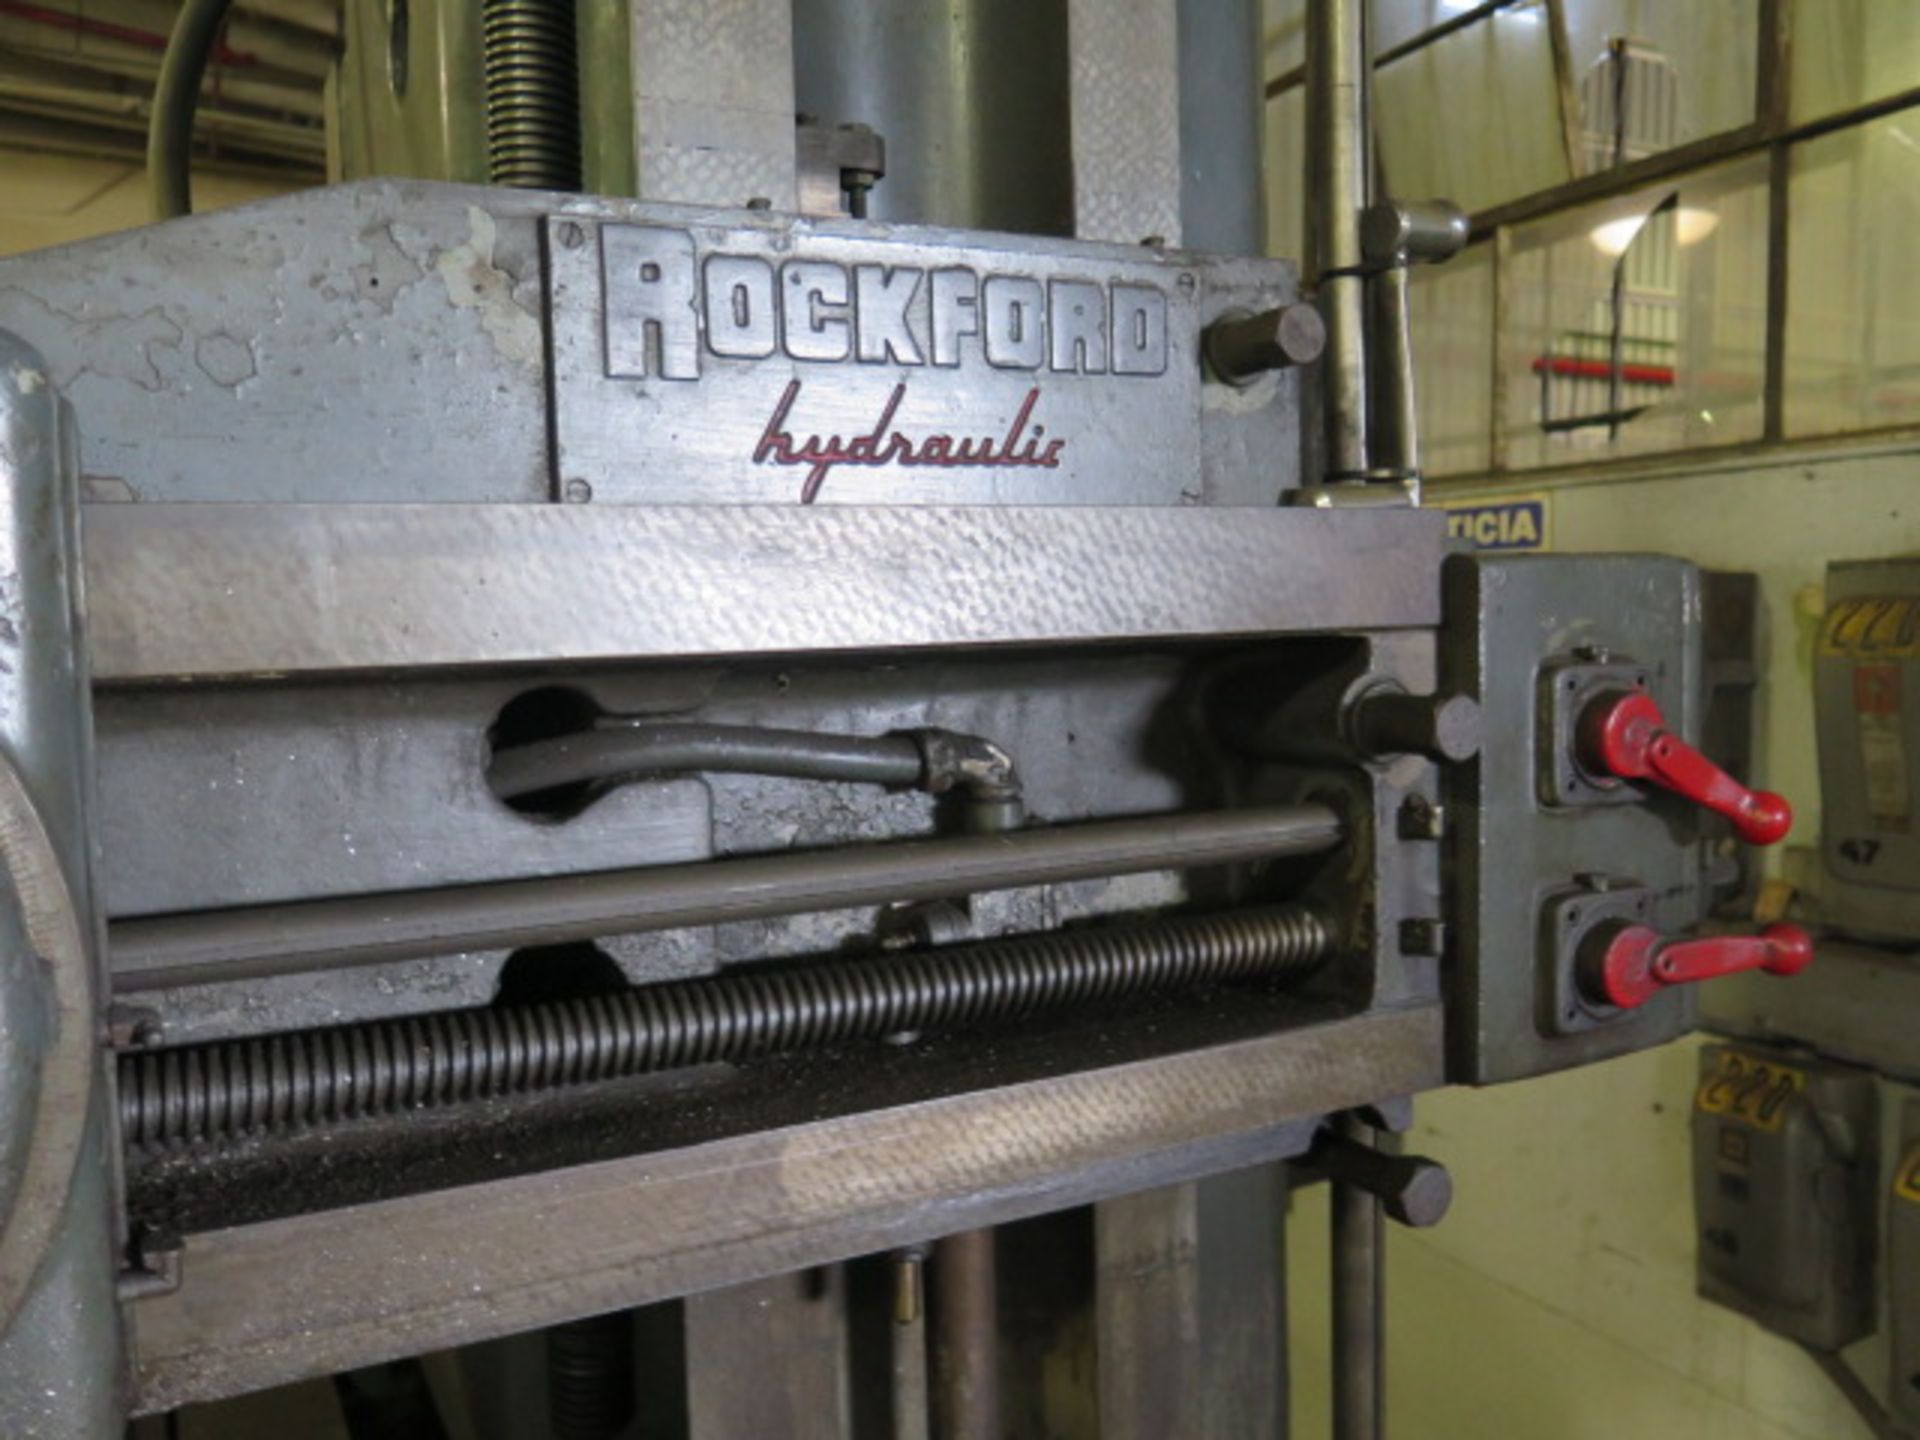 Rockford Hydraulic Planer / Shaper w/ Tilting Head, 21 1/2" x 72" Table (SOLD AS-IS - NO WARRANTY) - Image 8 of 12